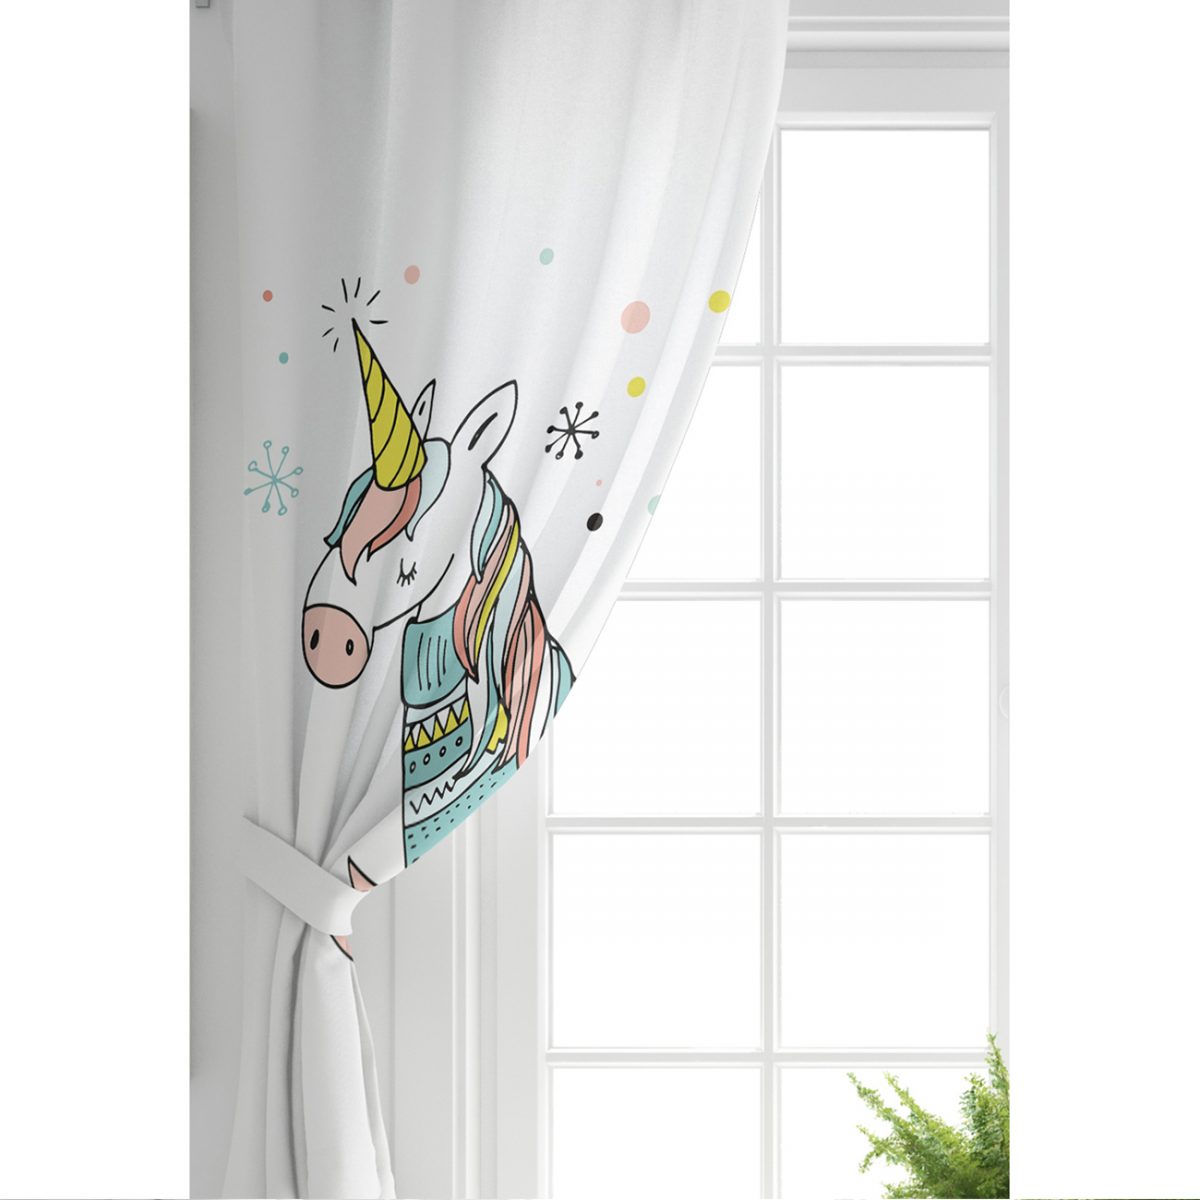 Beyaz Zeminde Unicorn Motifli Bebek Odası Fon Perde Realhomes